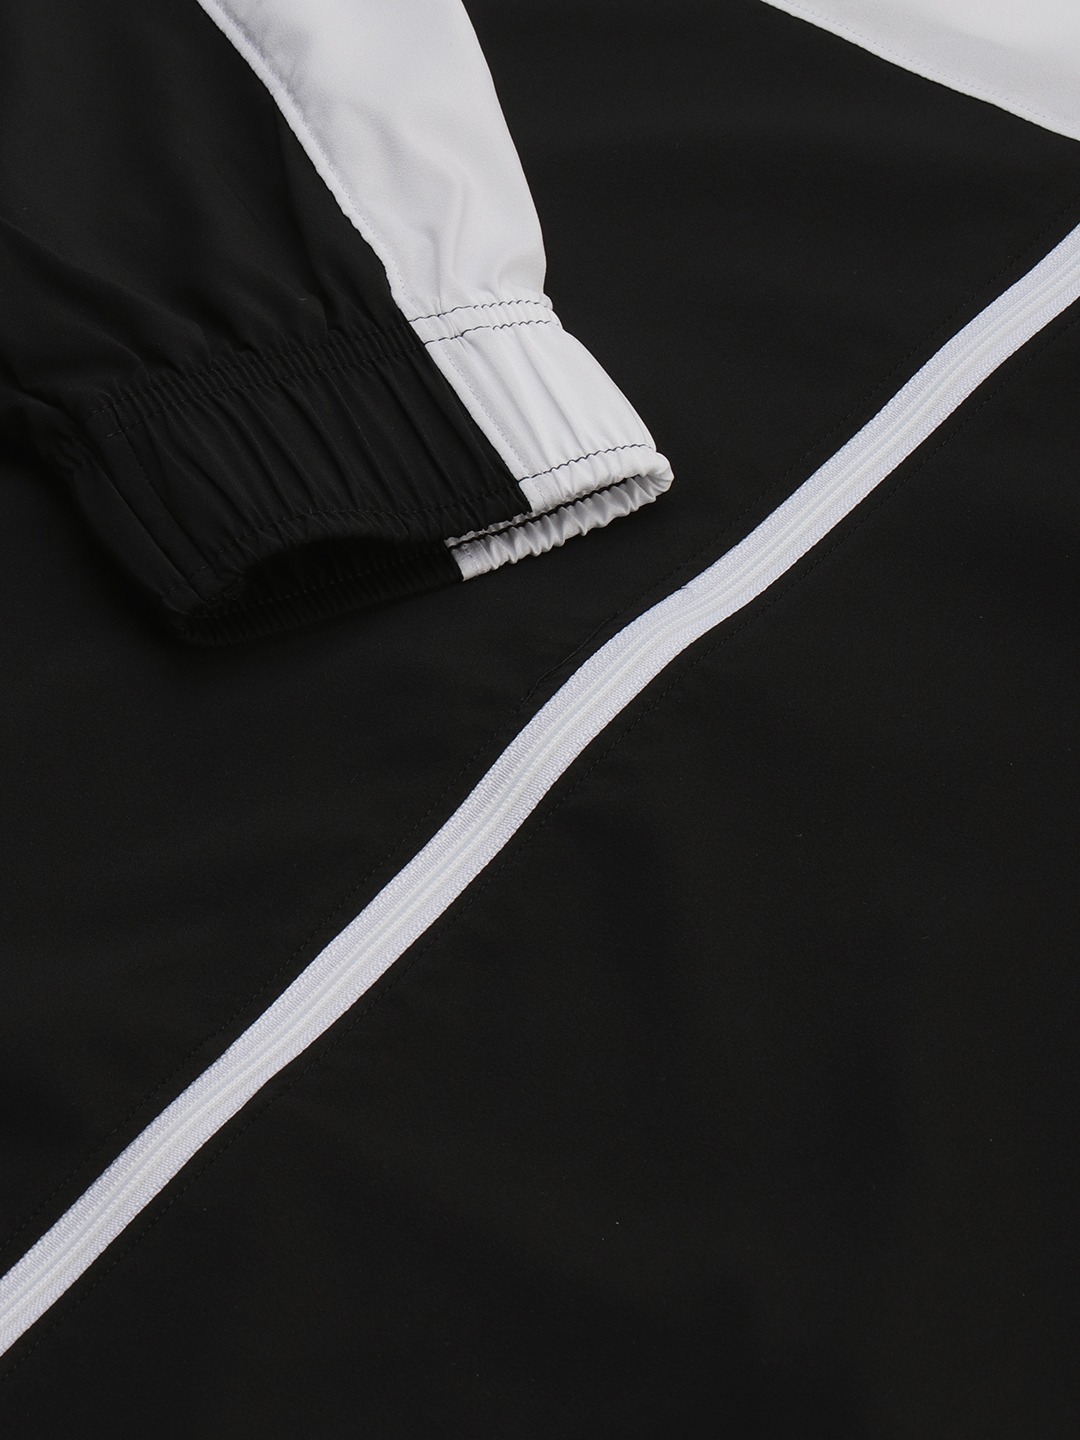 Clothing Tracksuits | Puma Men Black & White Colourblocked Favourite Training Track Suit - AB34820